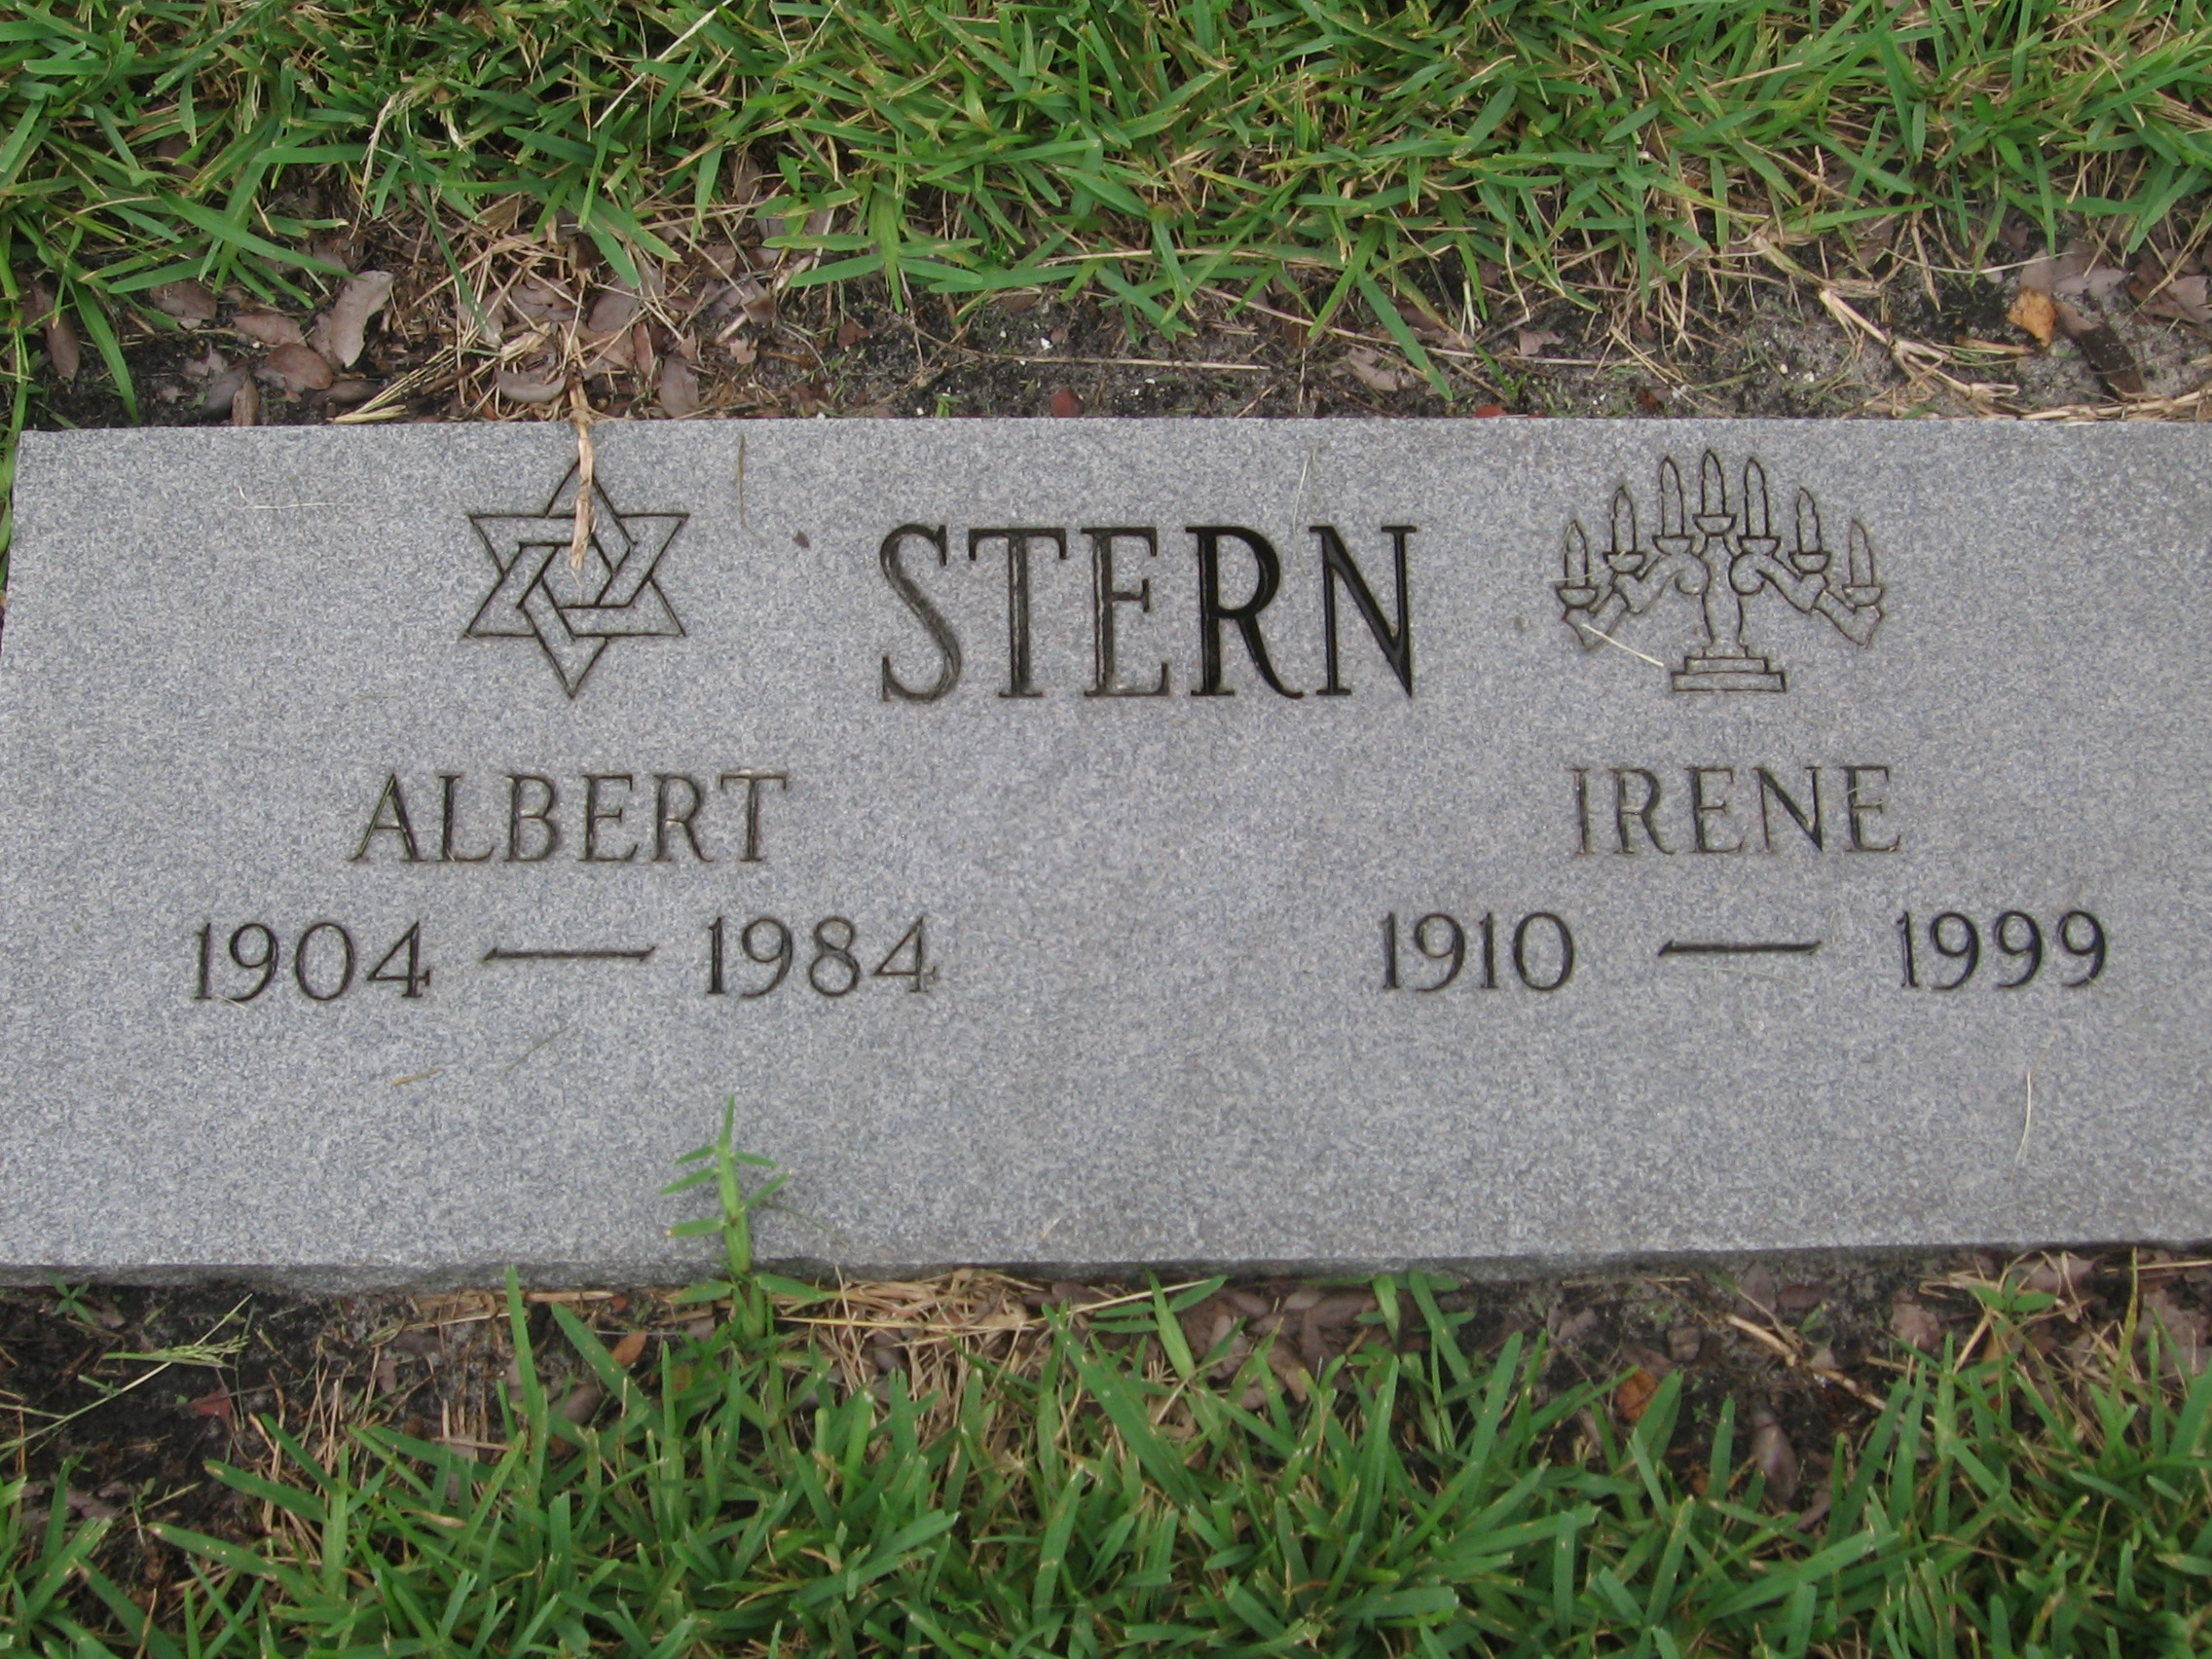 Irene Stern